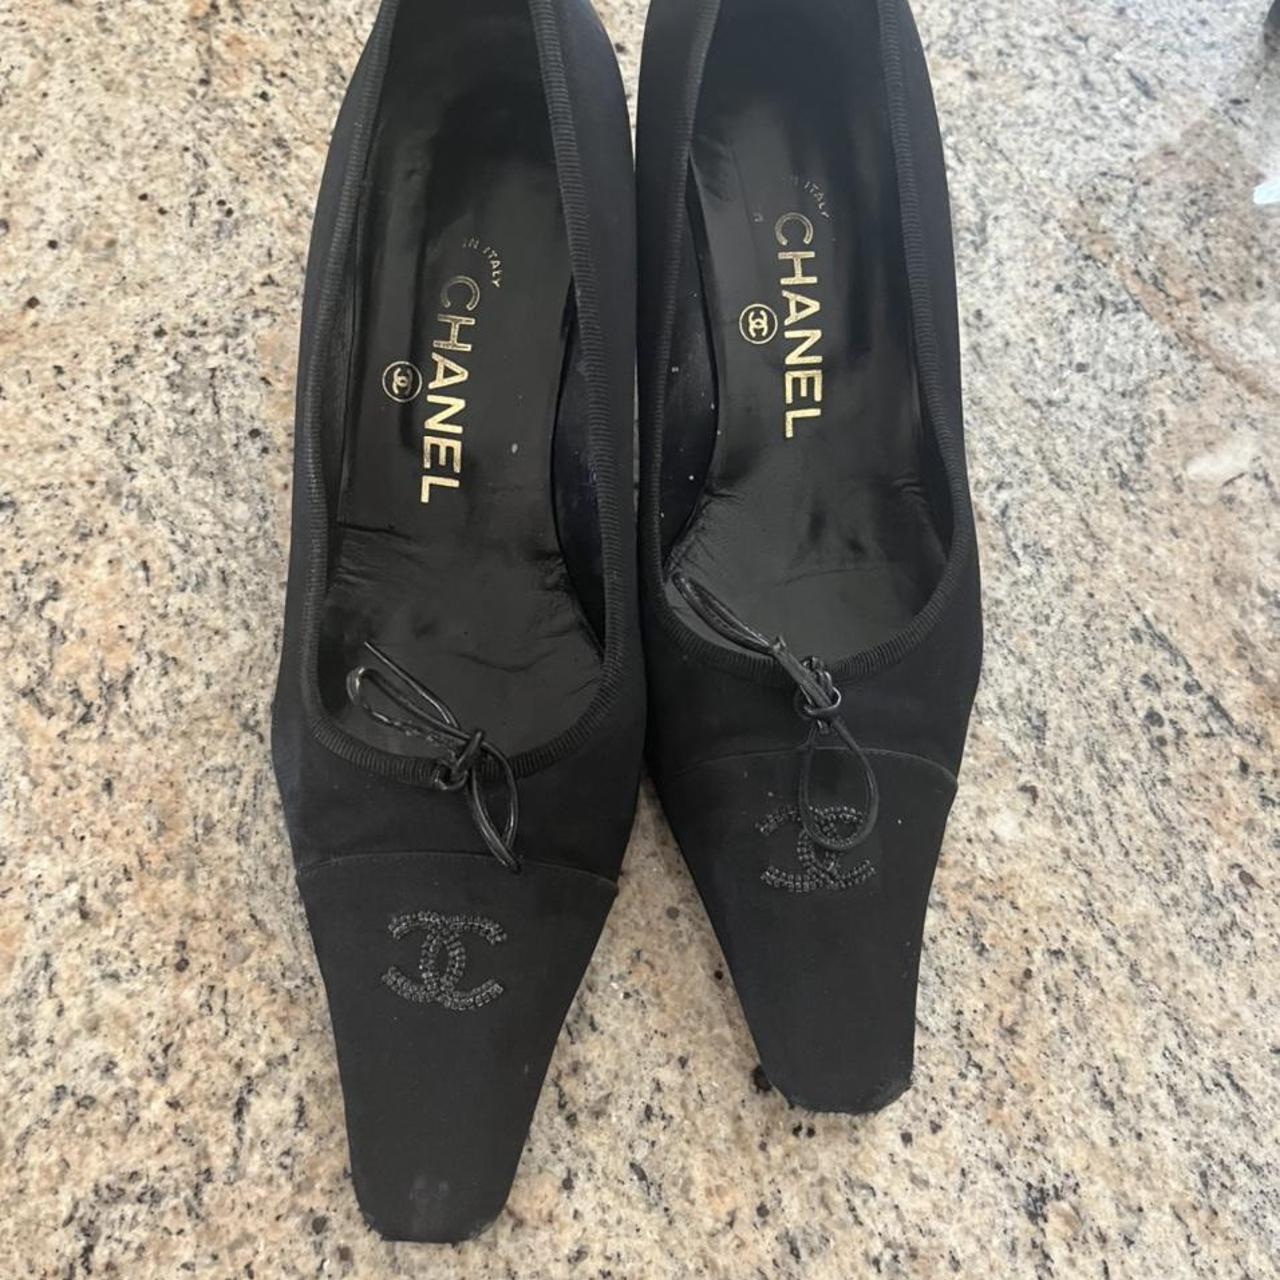 Woman’s Chanel shose size 6.5 - Depop